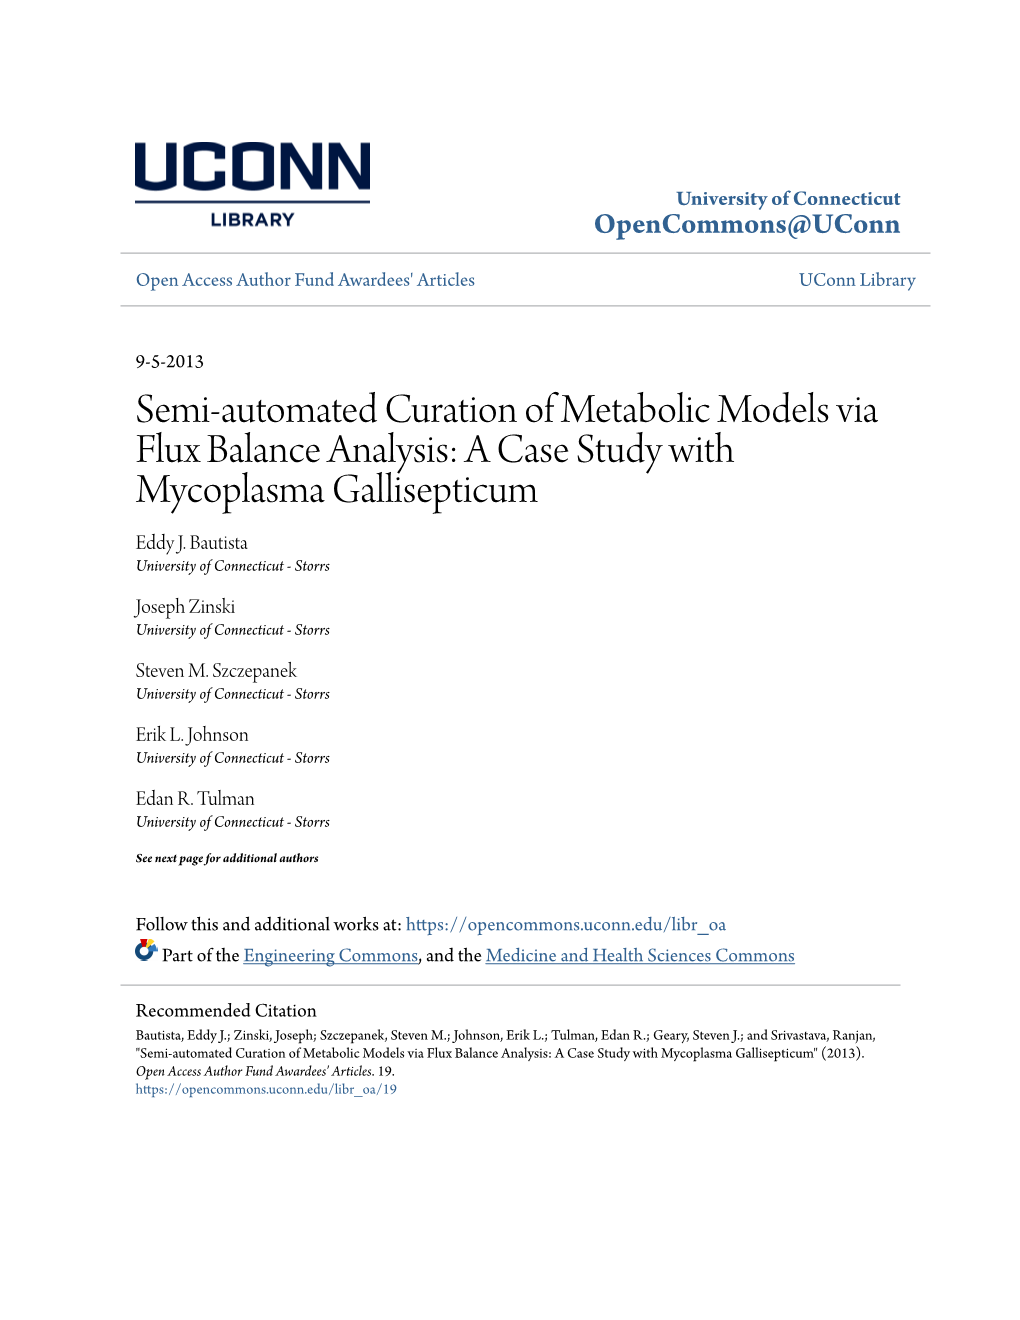 Semi-Automated Curation of Metabolic Models Via Flux Balance Analysis: a Case Study with Mycoplasma Gallisepticum Eddy J